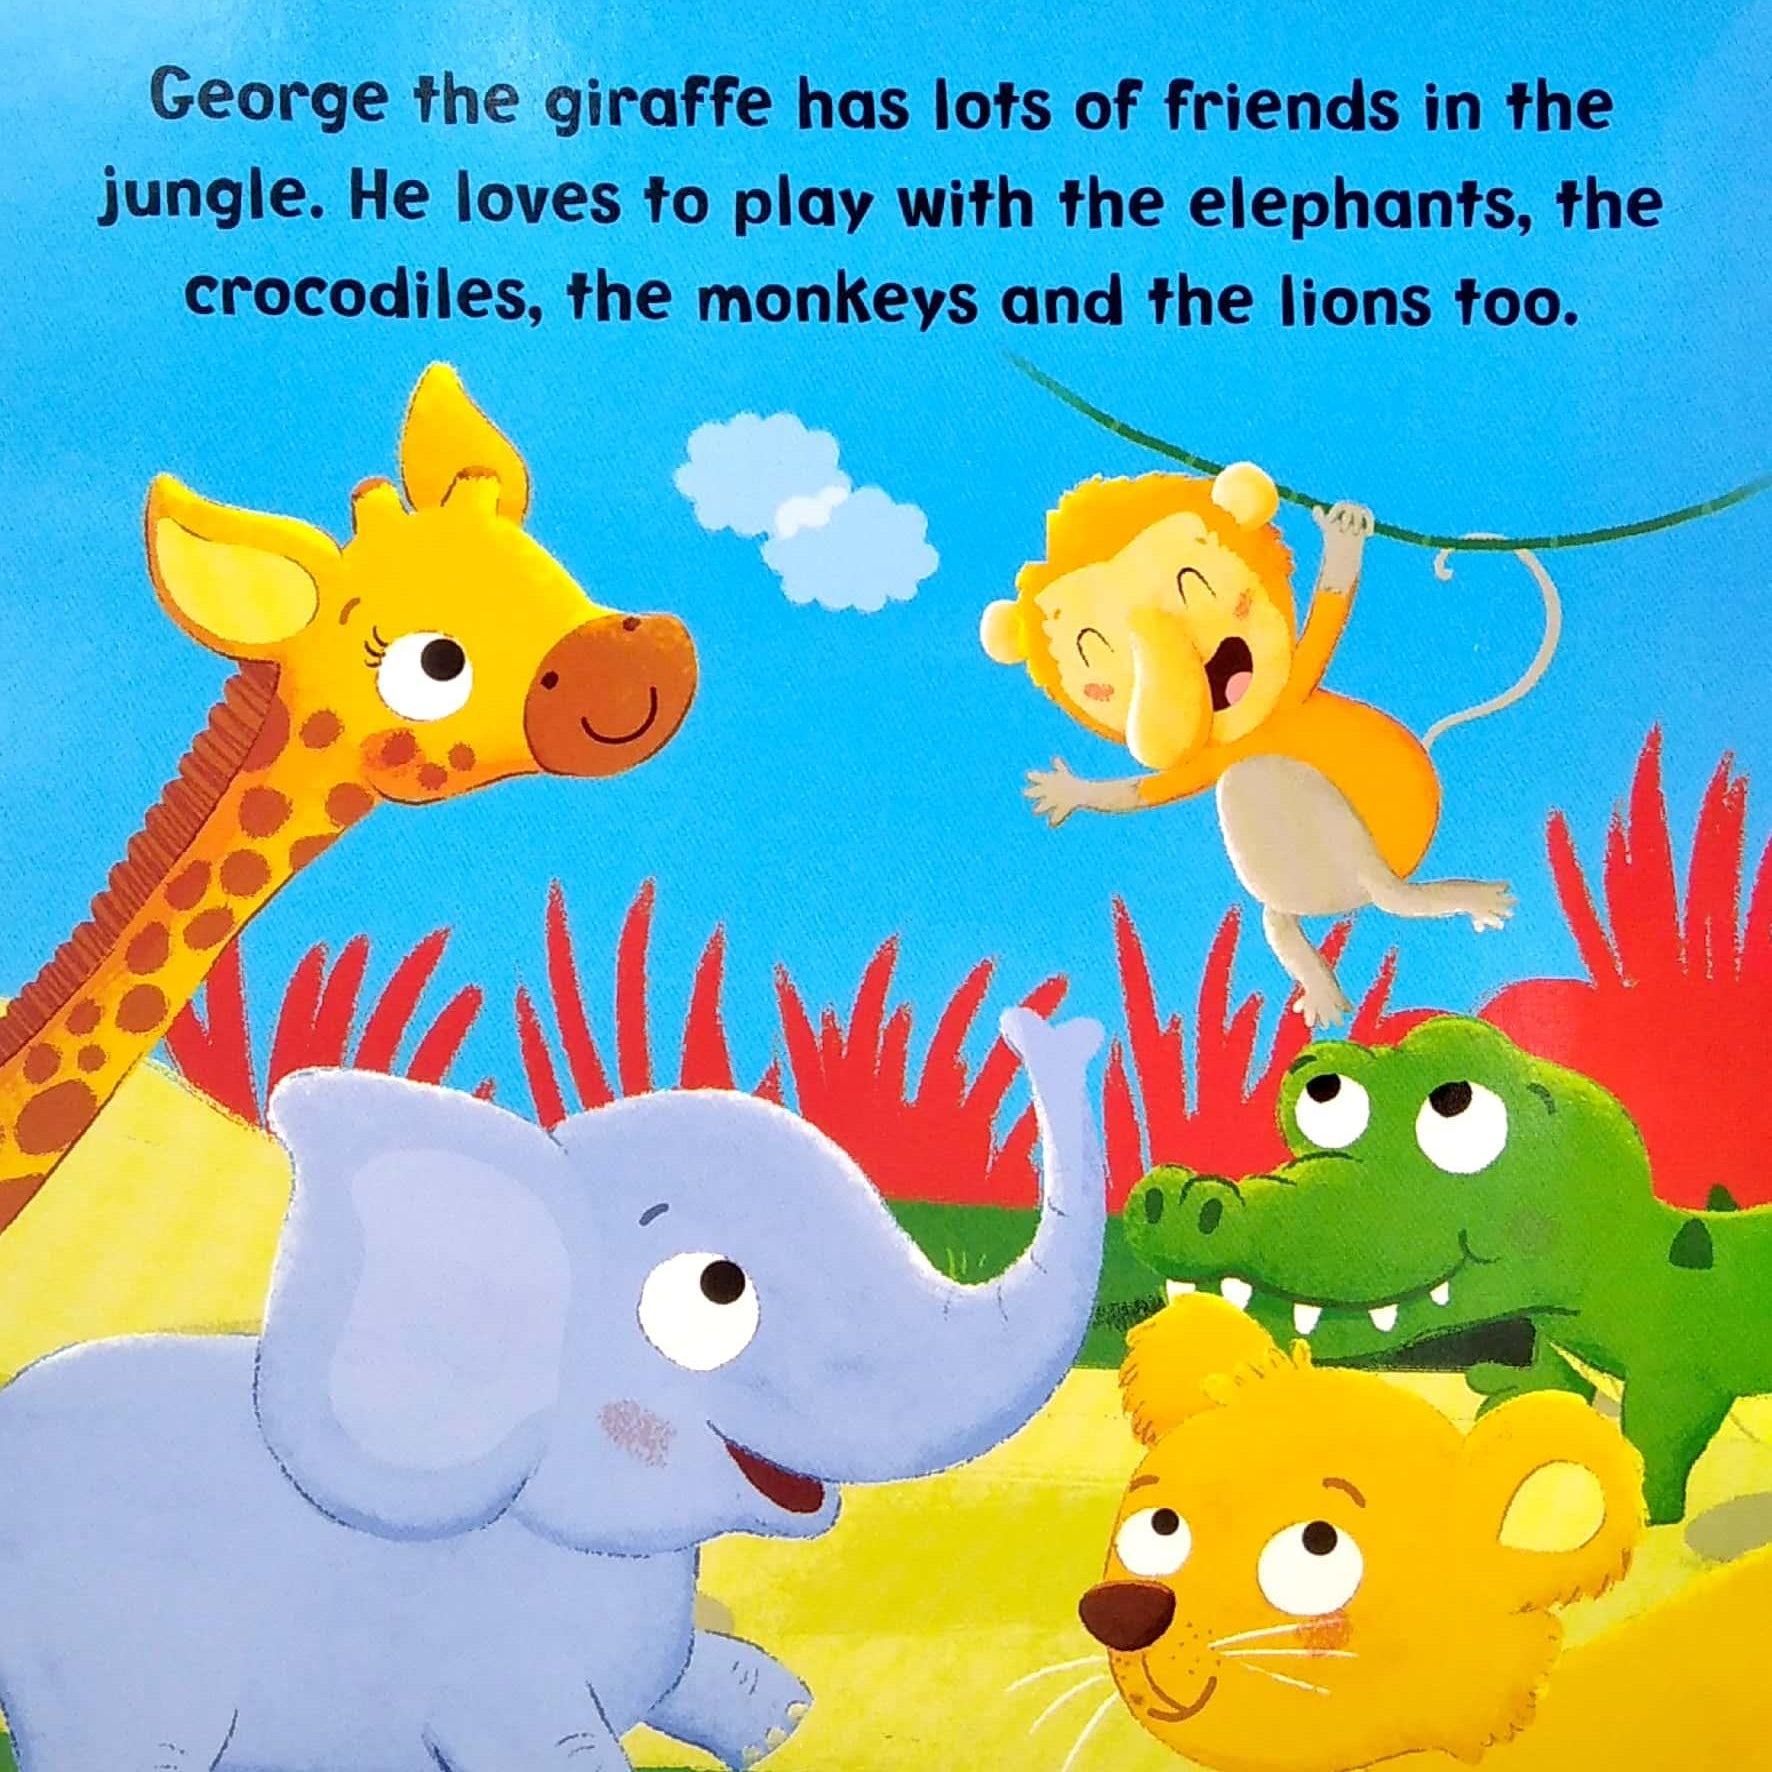 George Giraffe - Ourkids - OKO